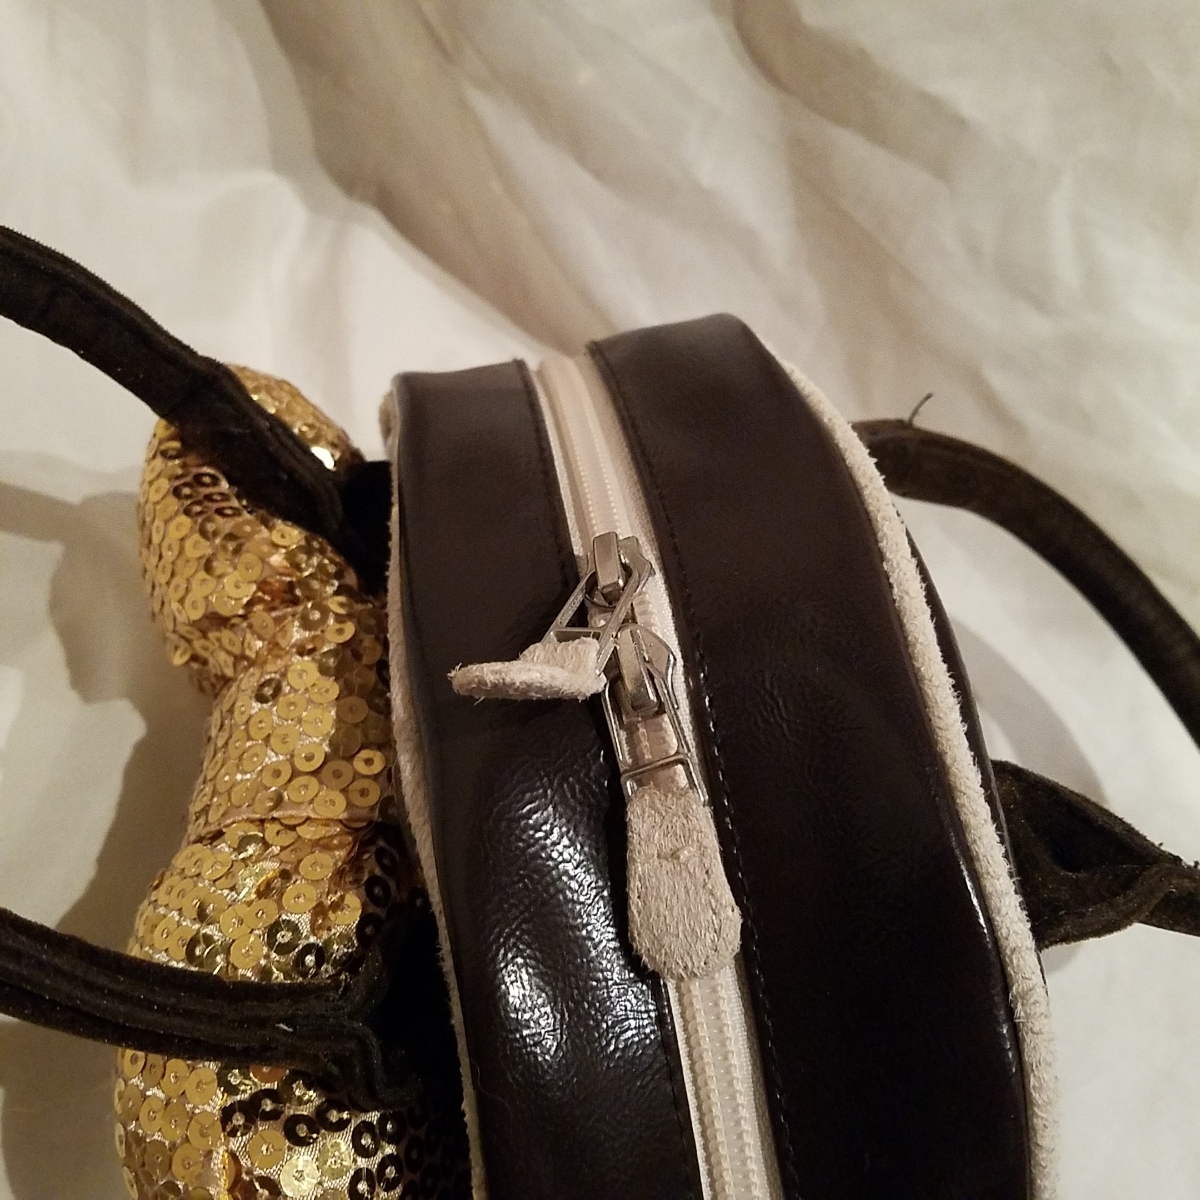  used *BOO HOMES/ spangled ribbon attaching bag 